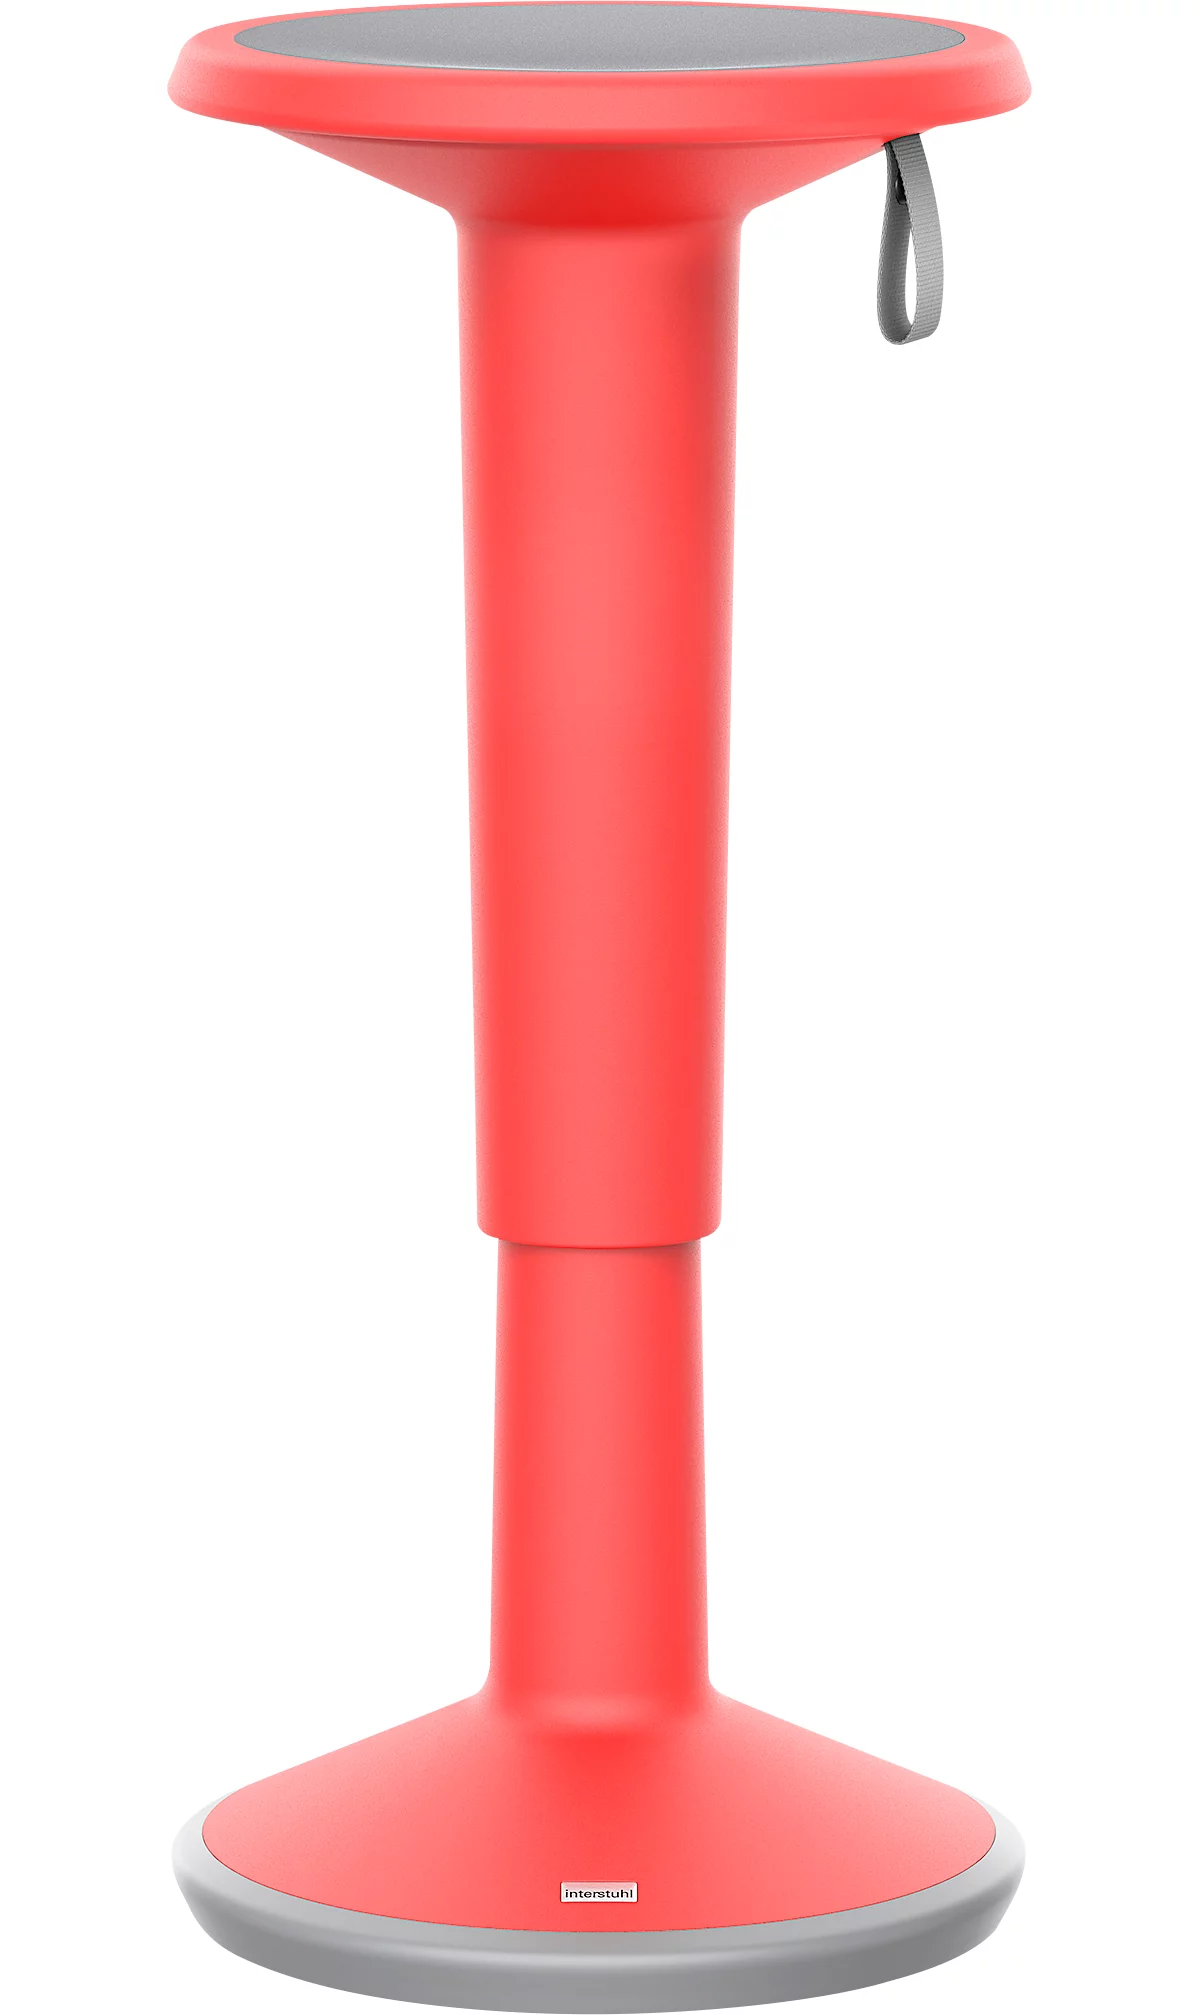 Taburete StandUP regulable en altura, Ø 330 x H 590 - 845 mm, rojo